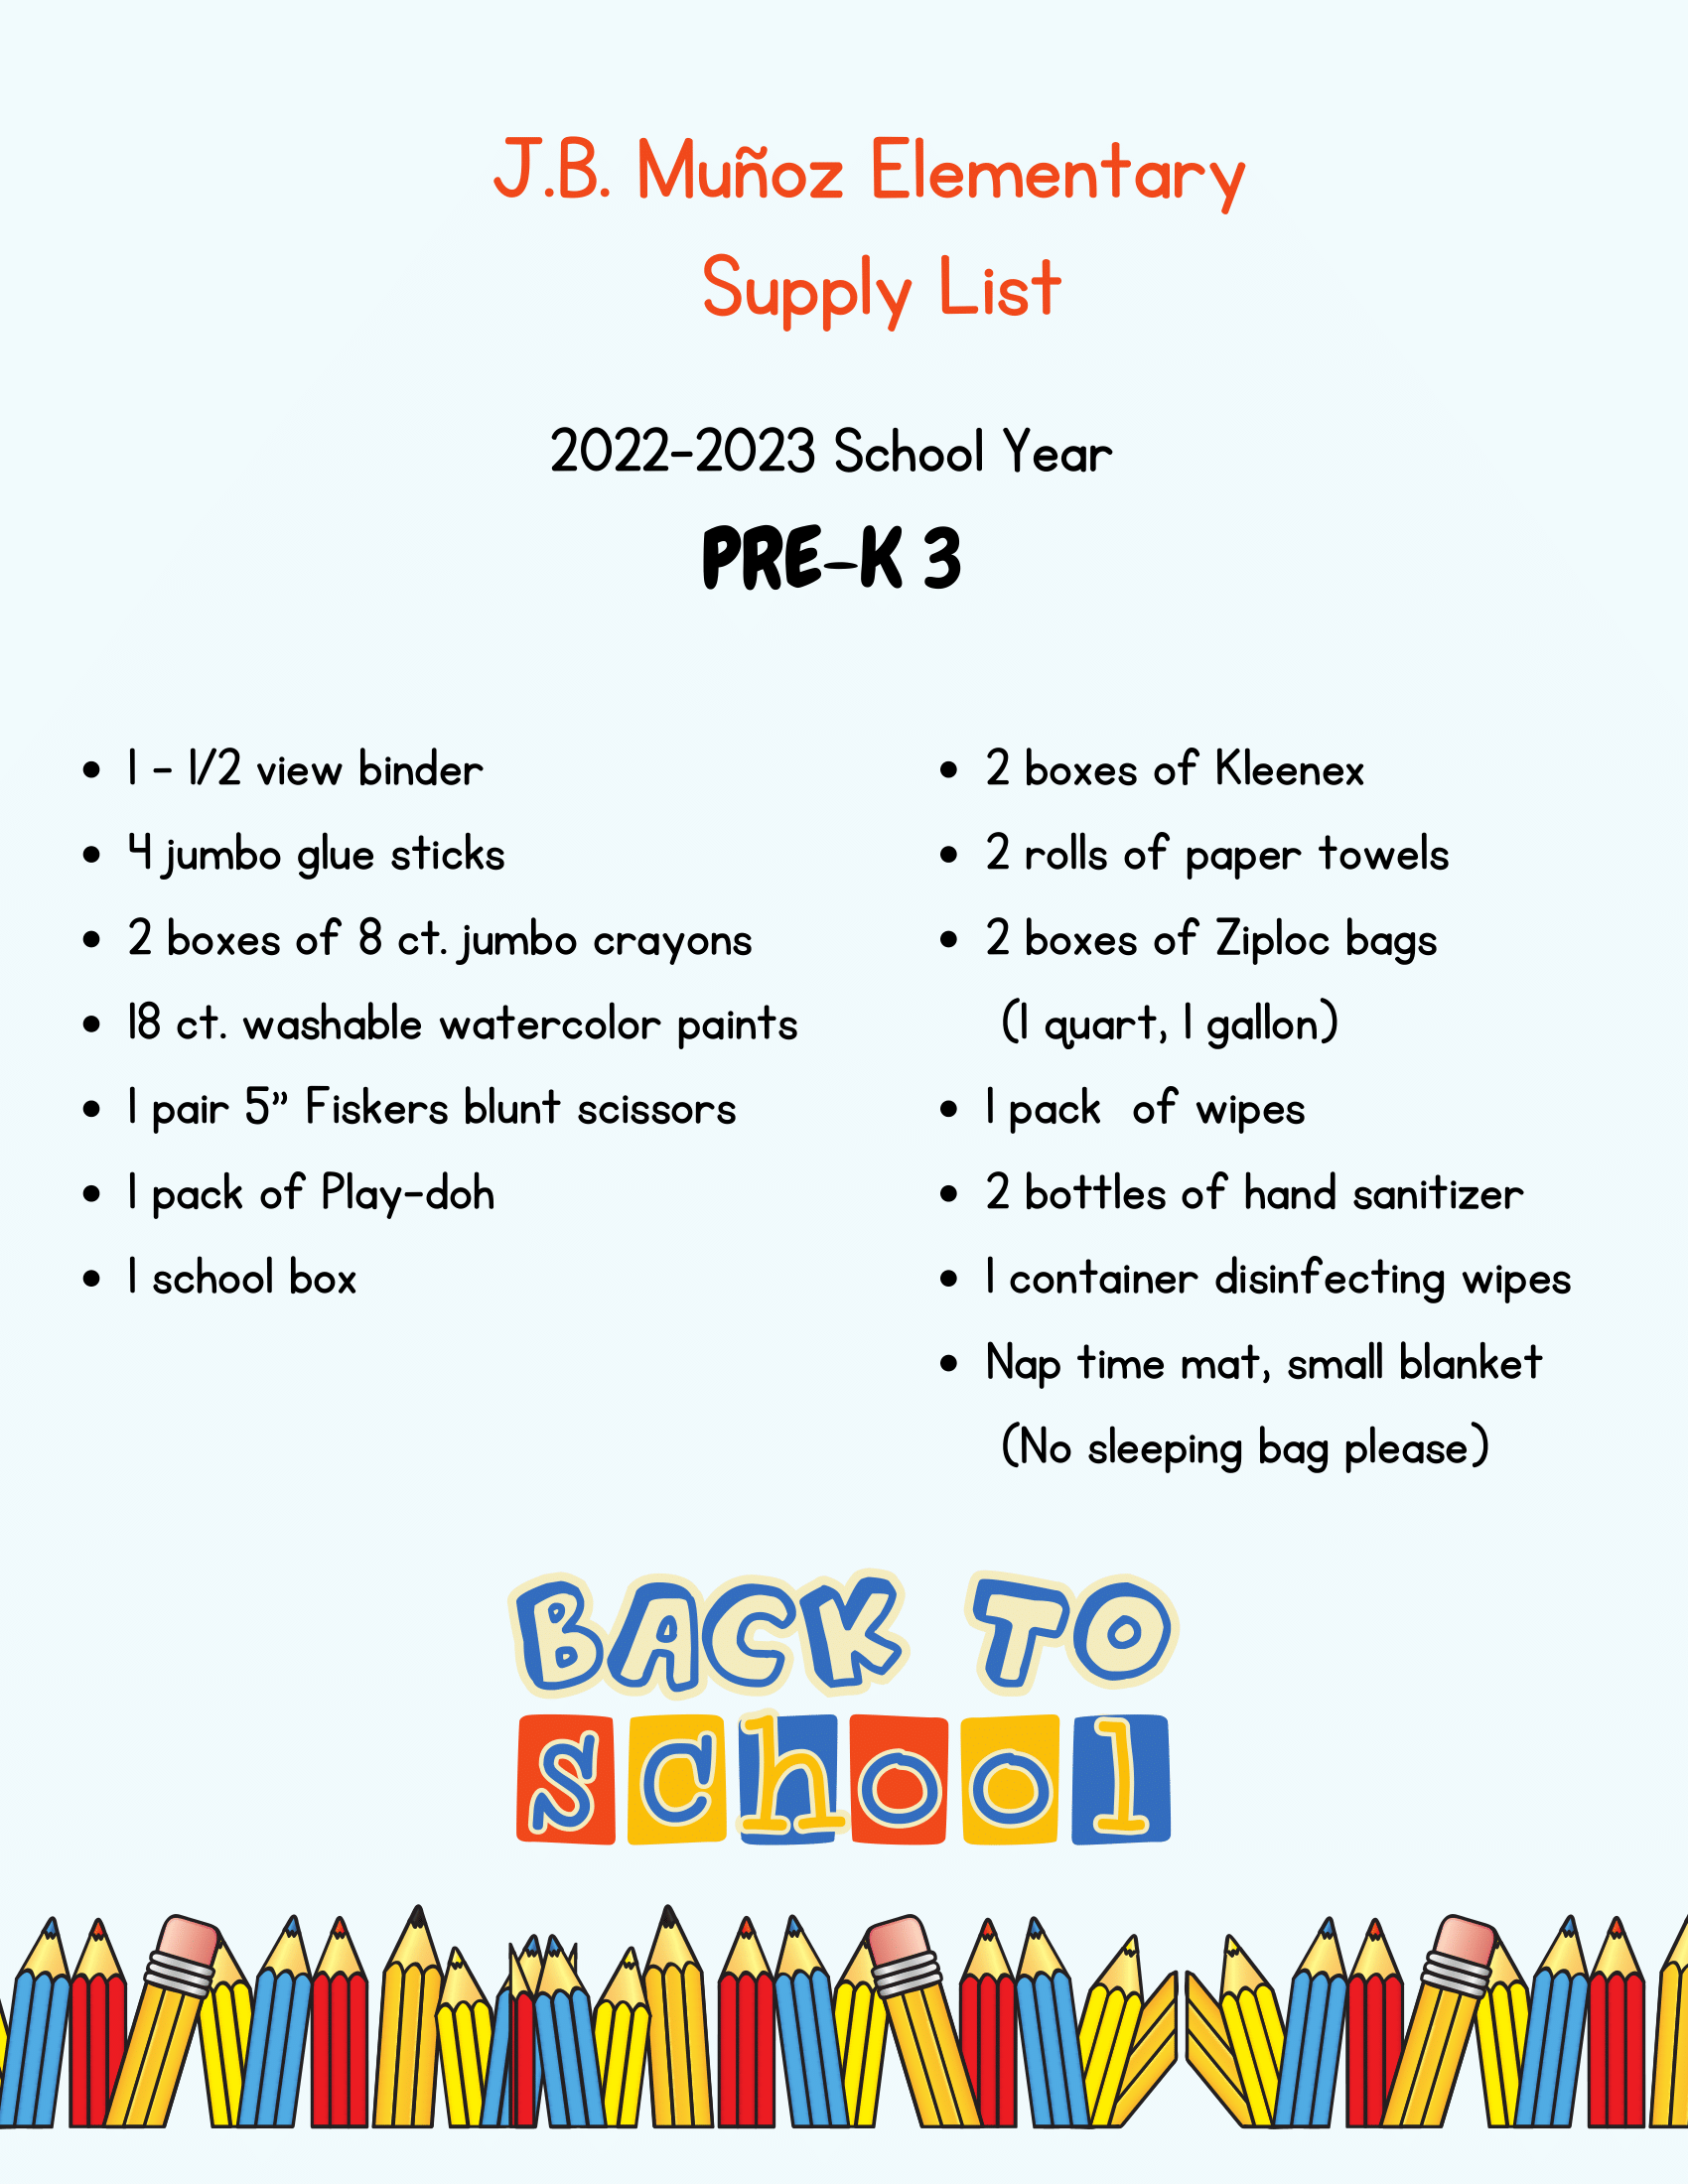 PK 3 School Supply List